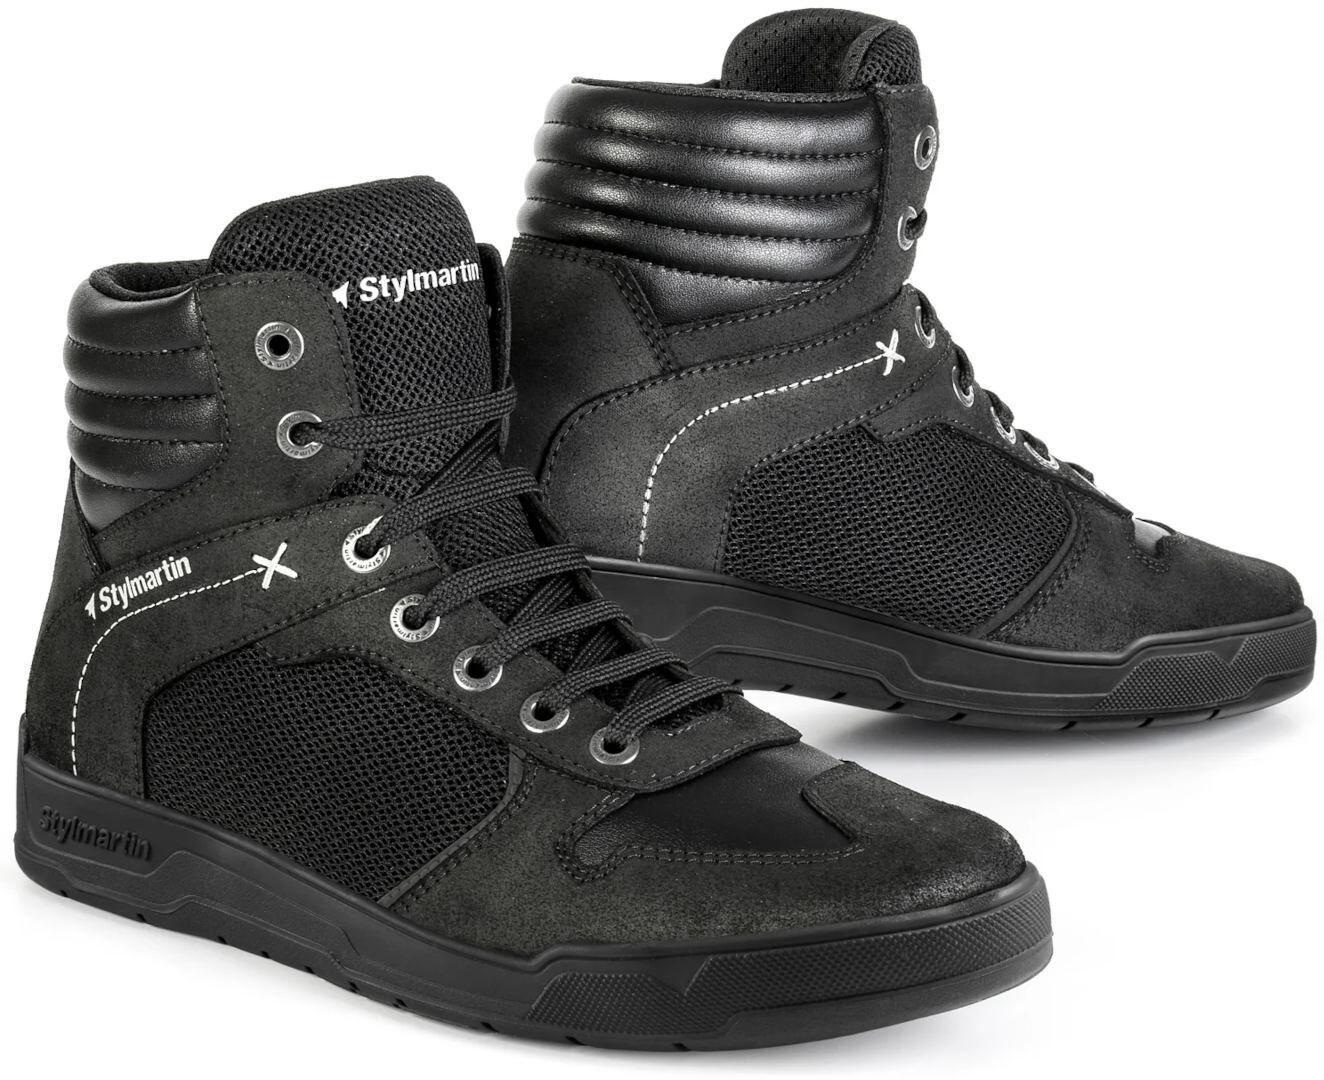 Stylmartin Atom Evo Zapatos de moto - Negro (43)